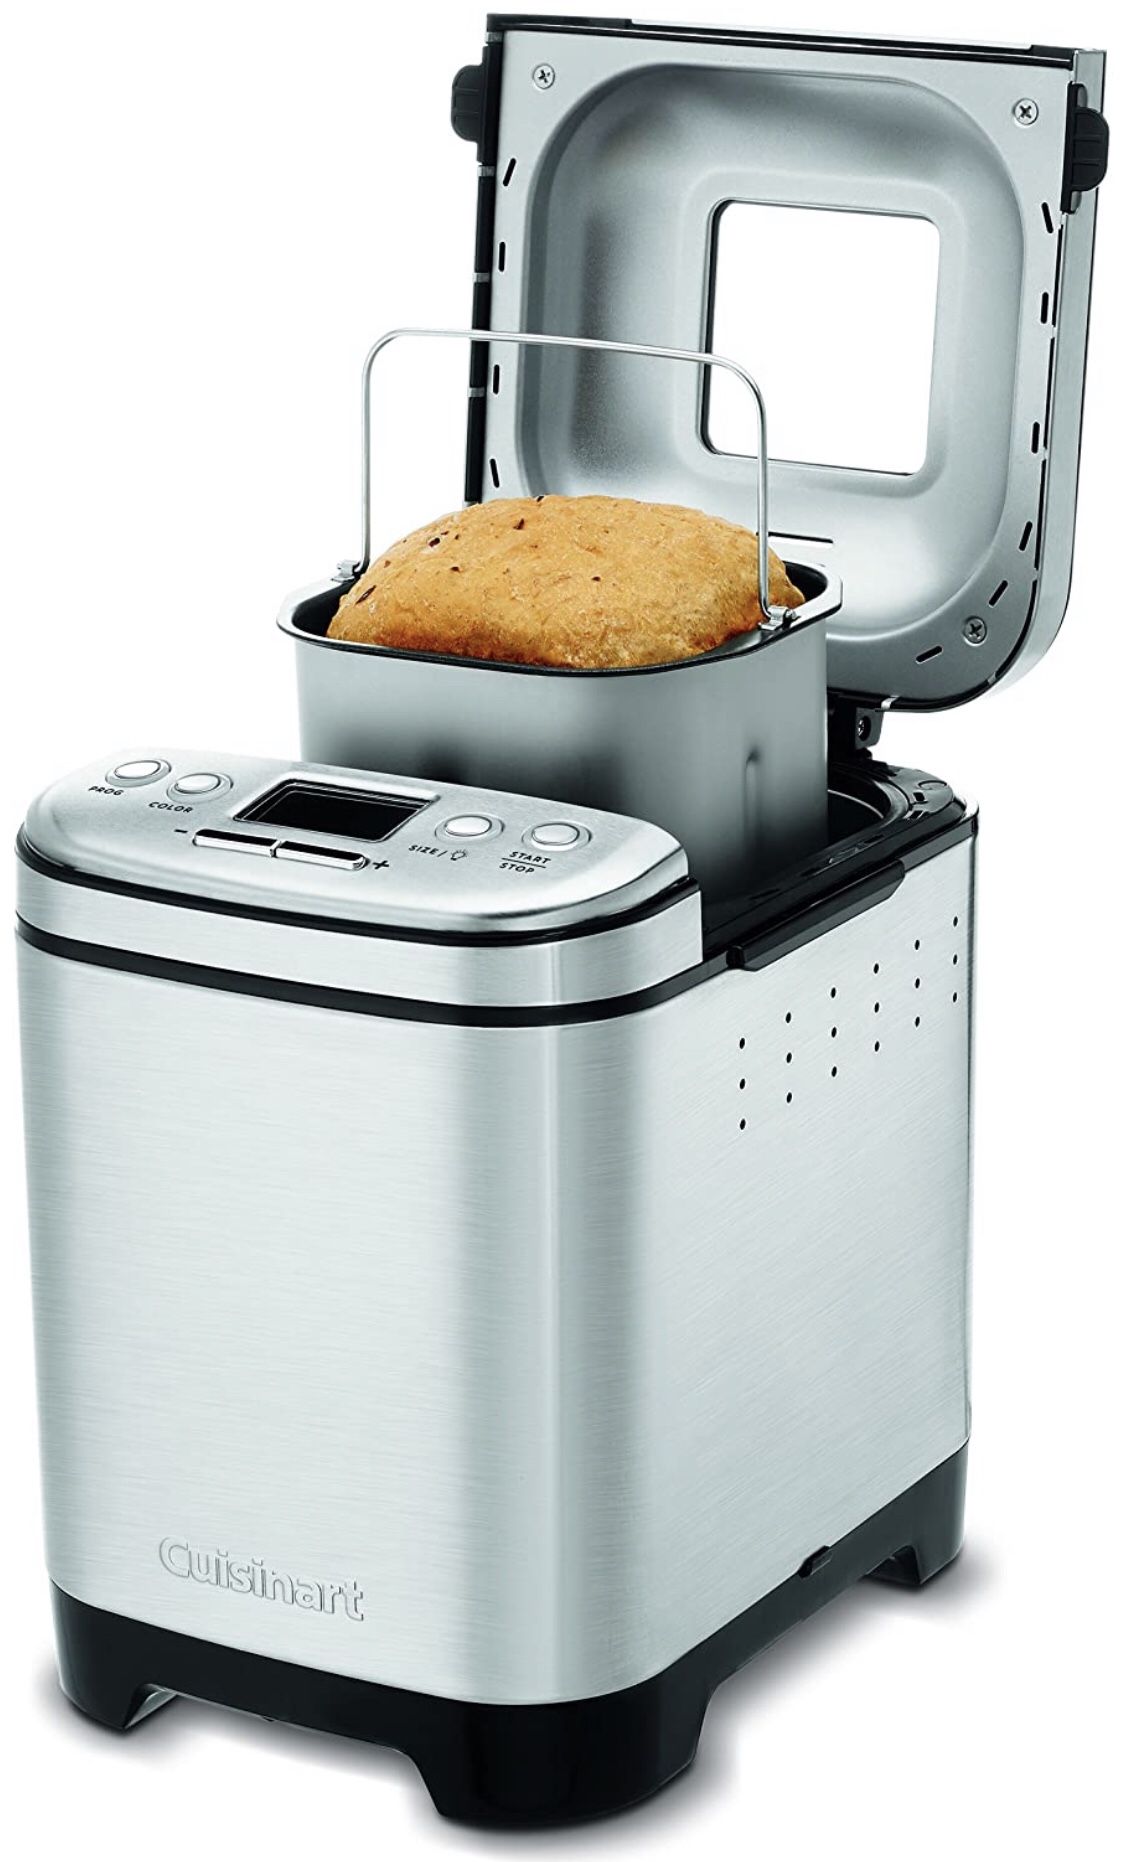 CBK-110 Cuisinart Compact Automatic Bread Maker Cuisinart Bread Maker, Up To 2lb Loaf, New Compact Automatic